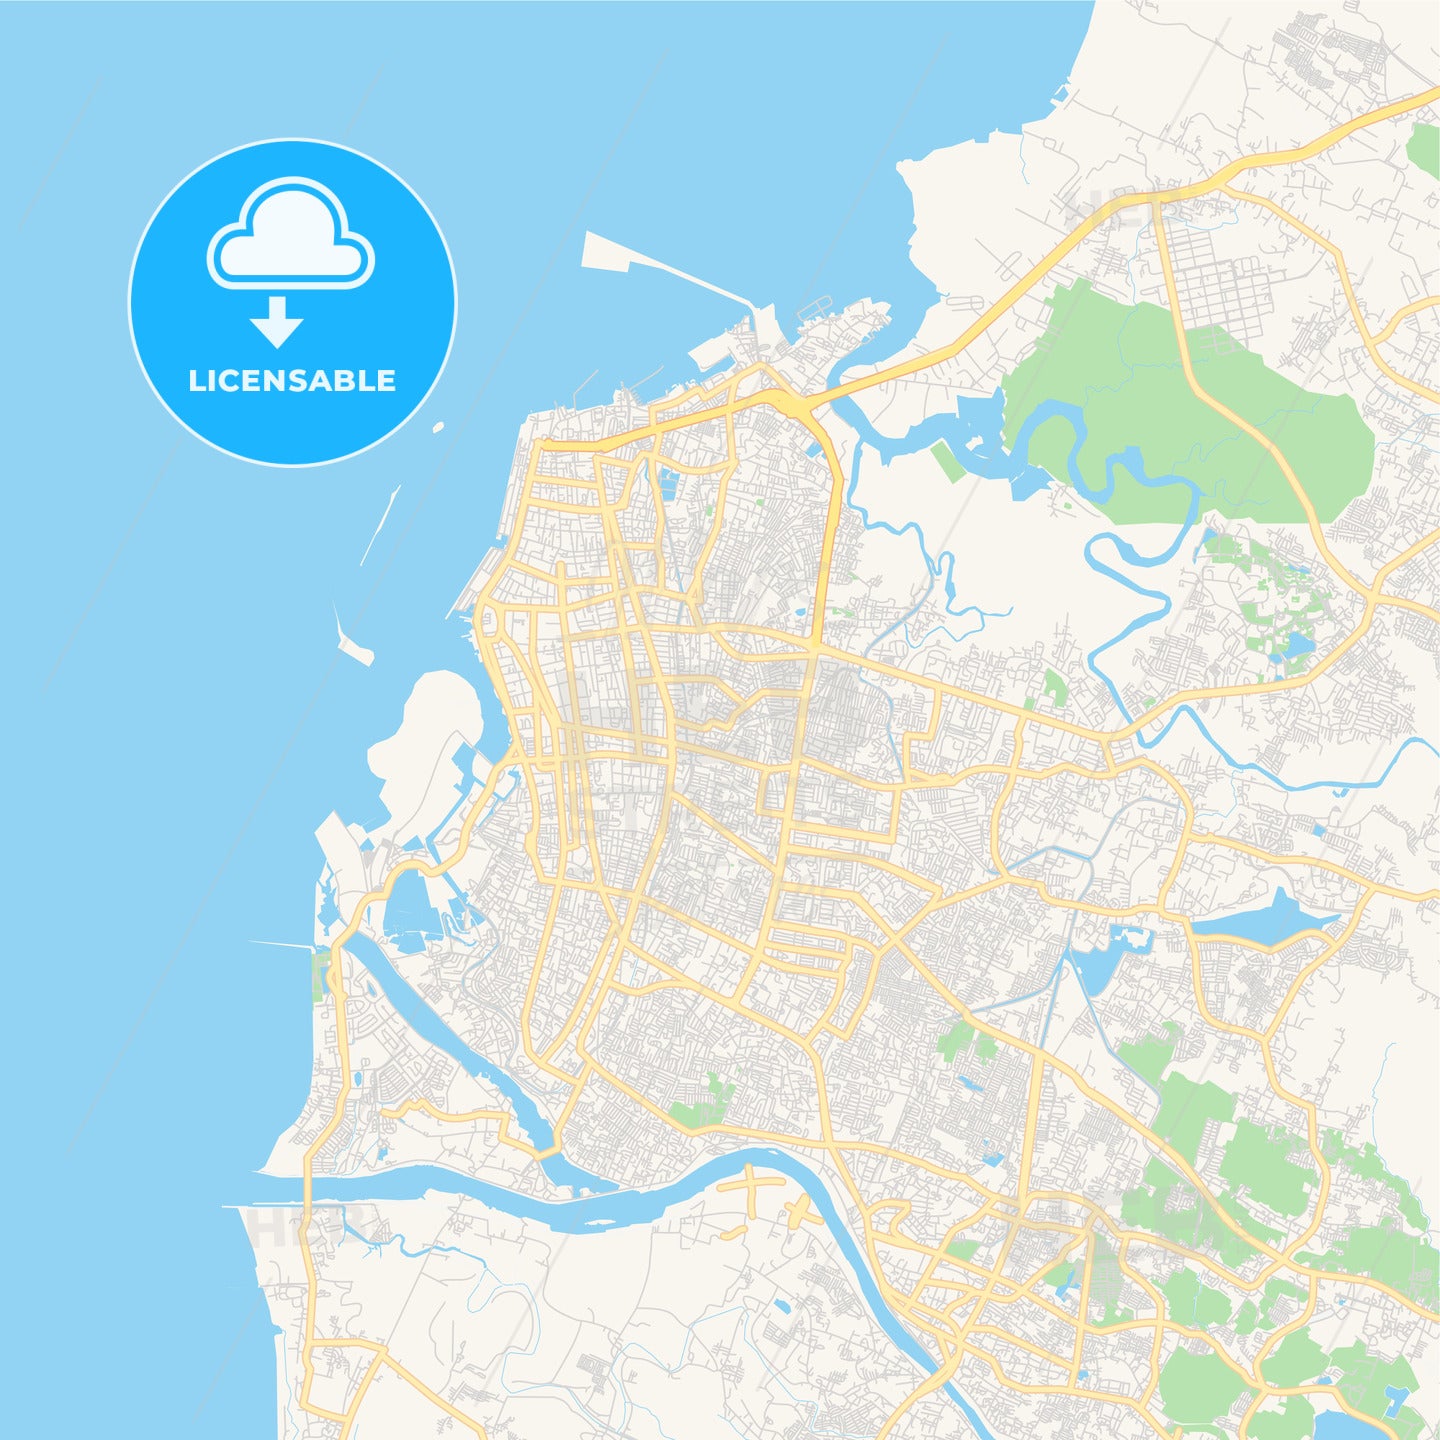 Printable street map of Makassar, Indonesia